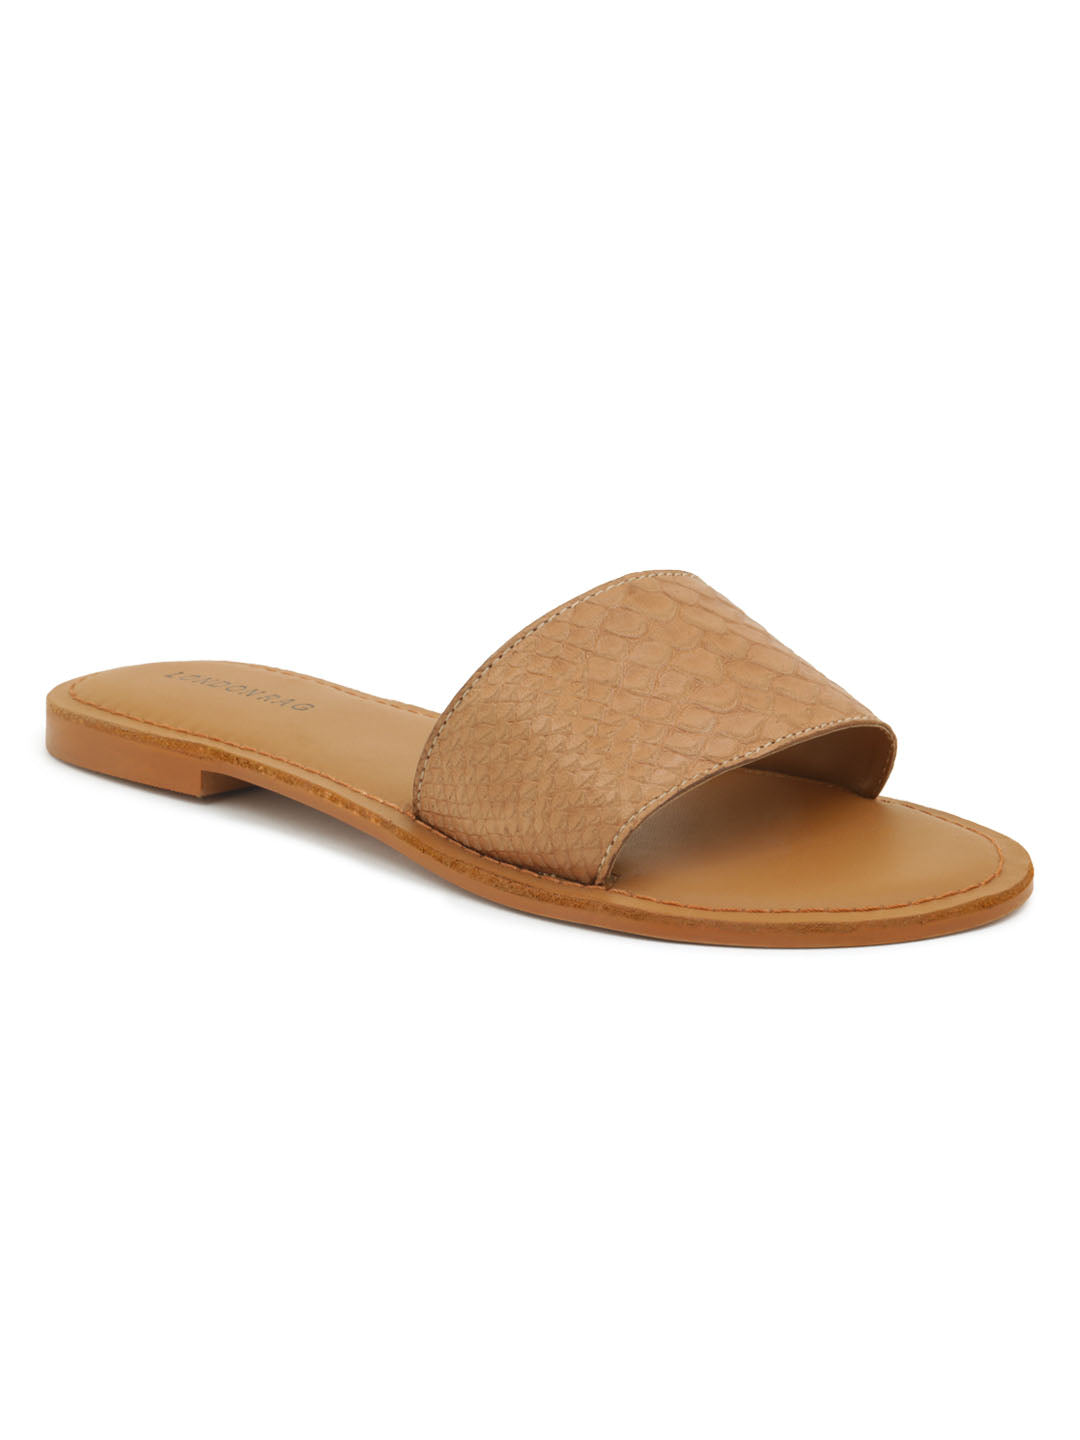 Tan Croc Textured Slip-On Sandal - Tan